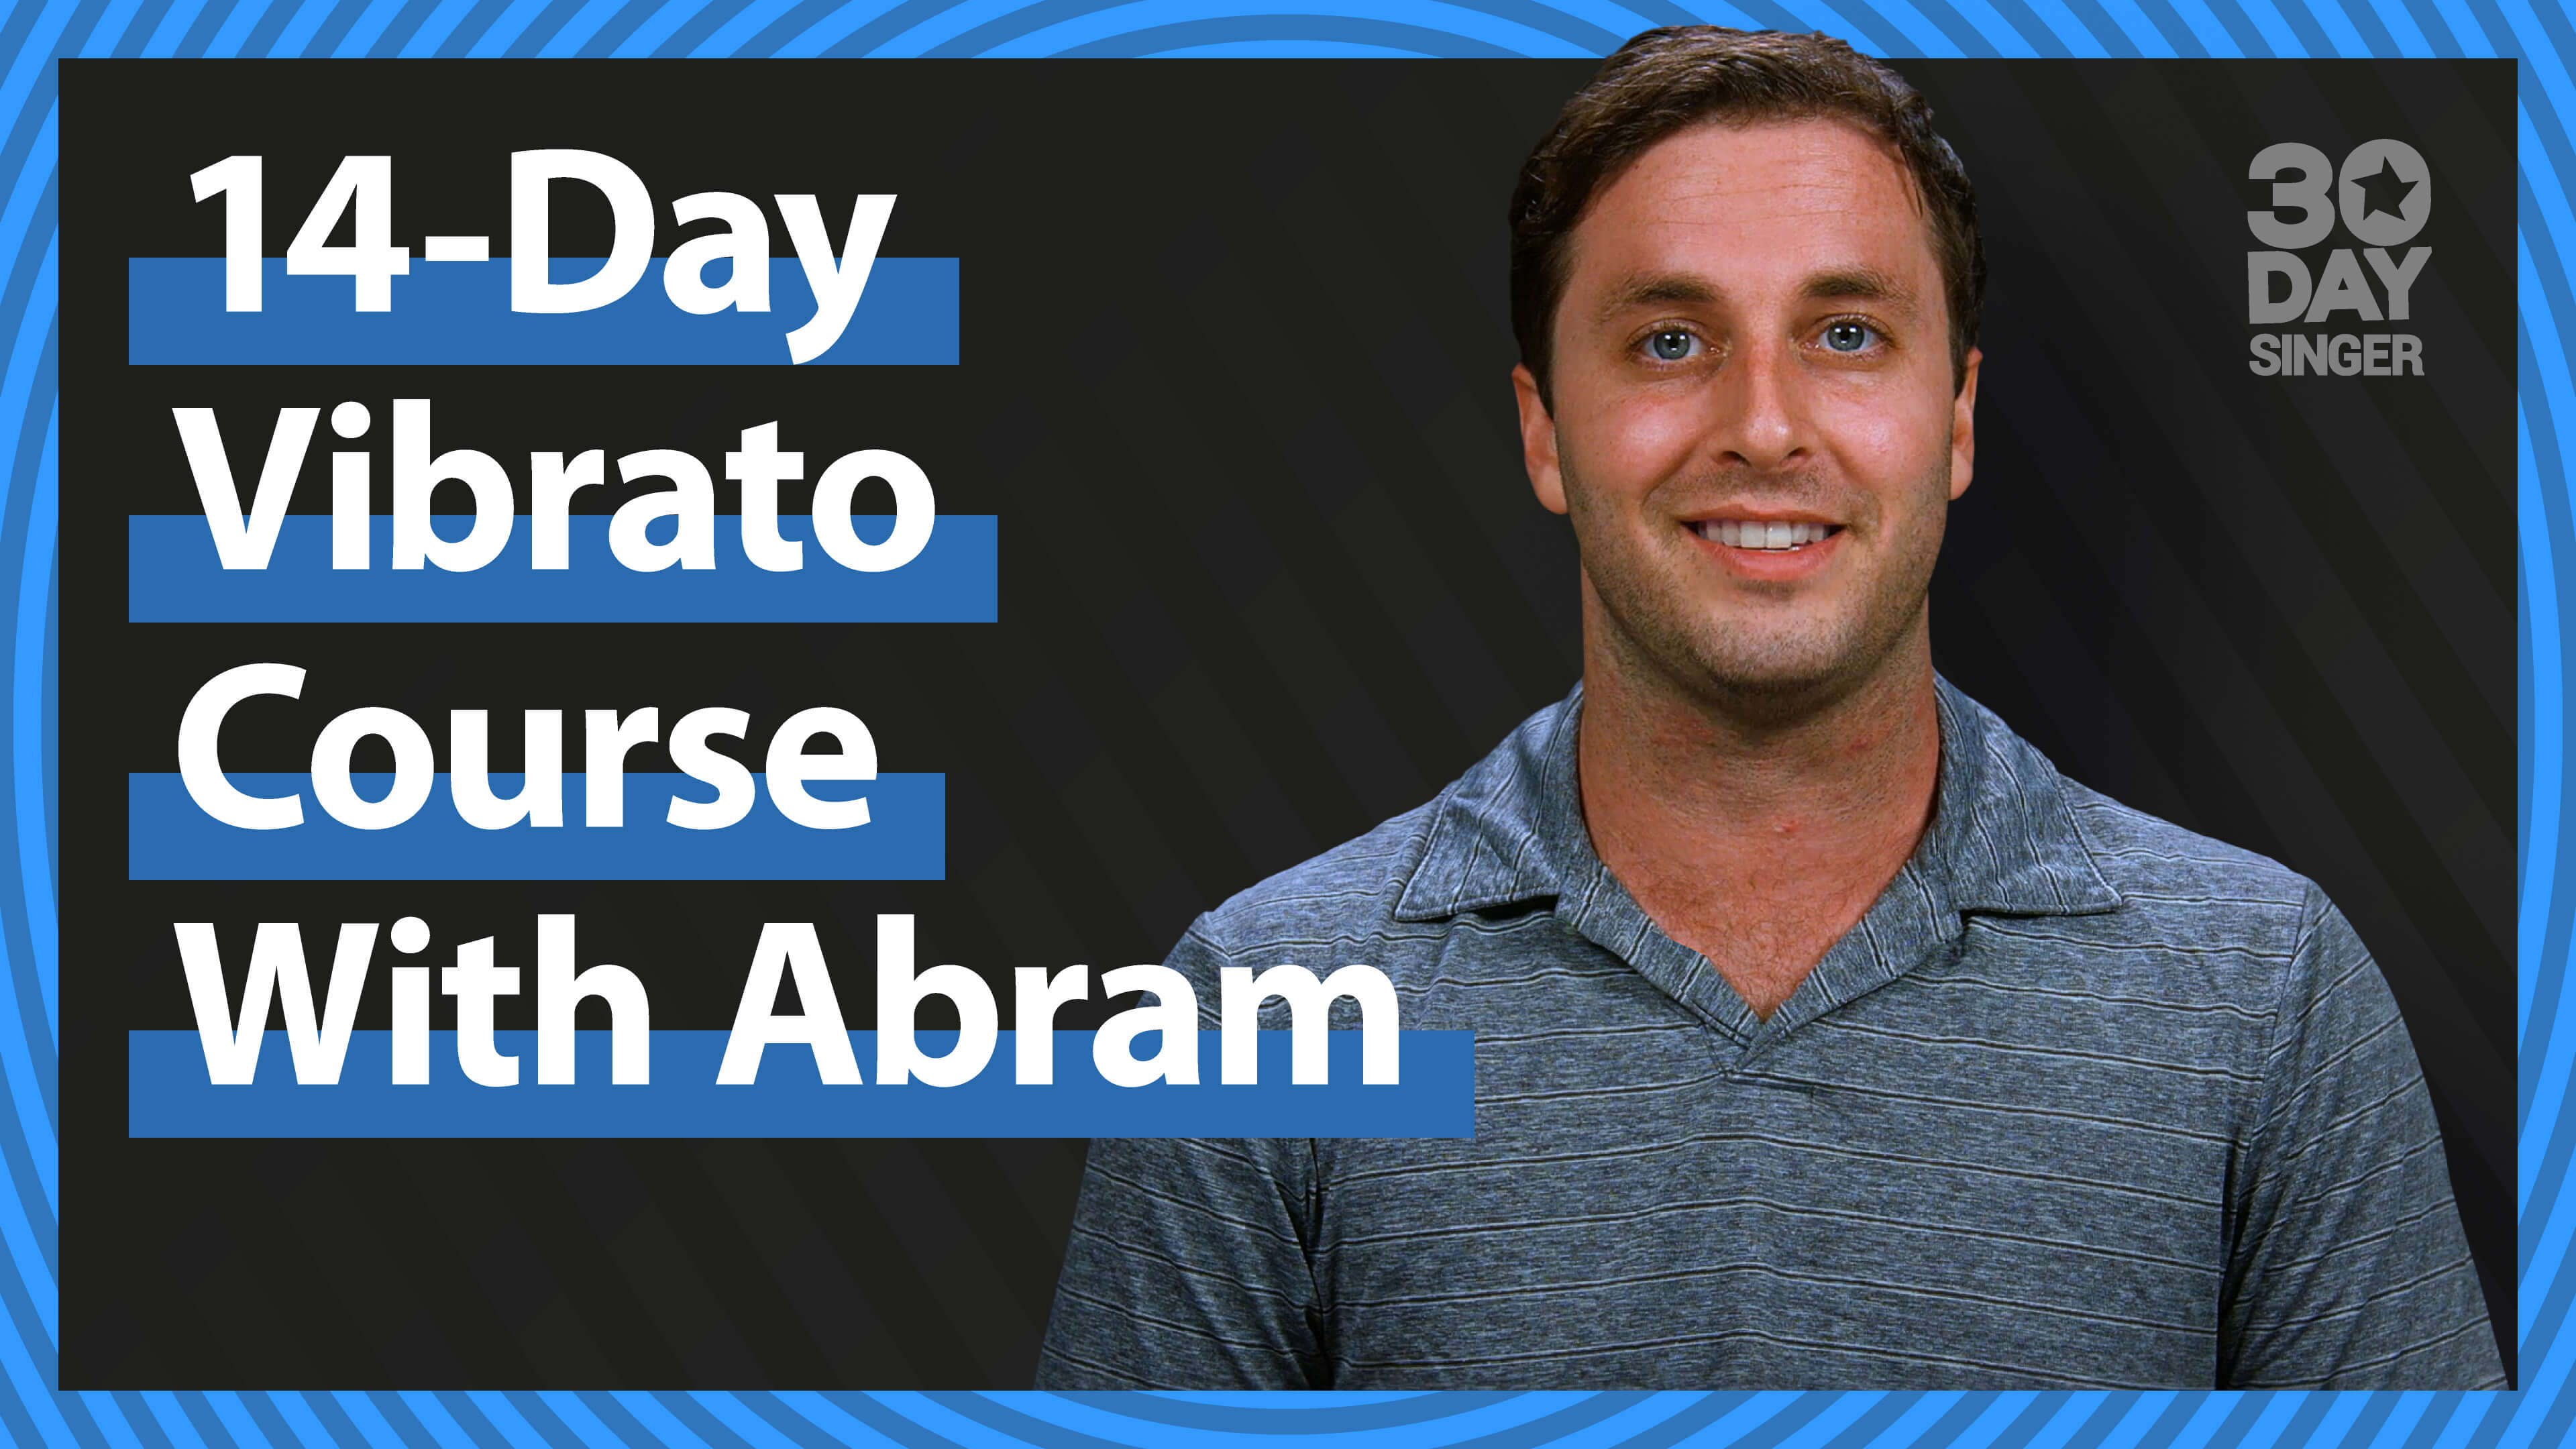 14-Day Vibrato Course With Abram